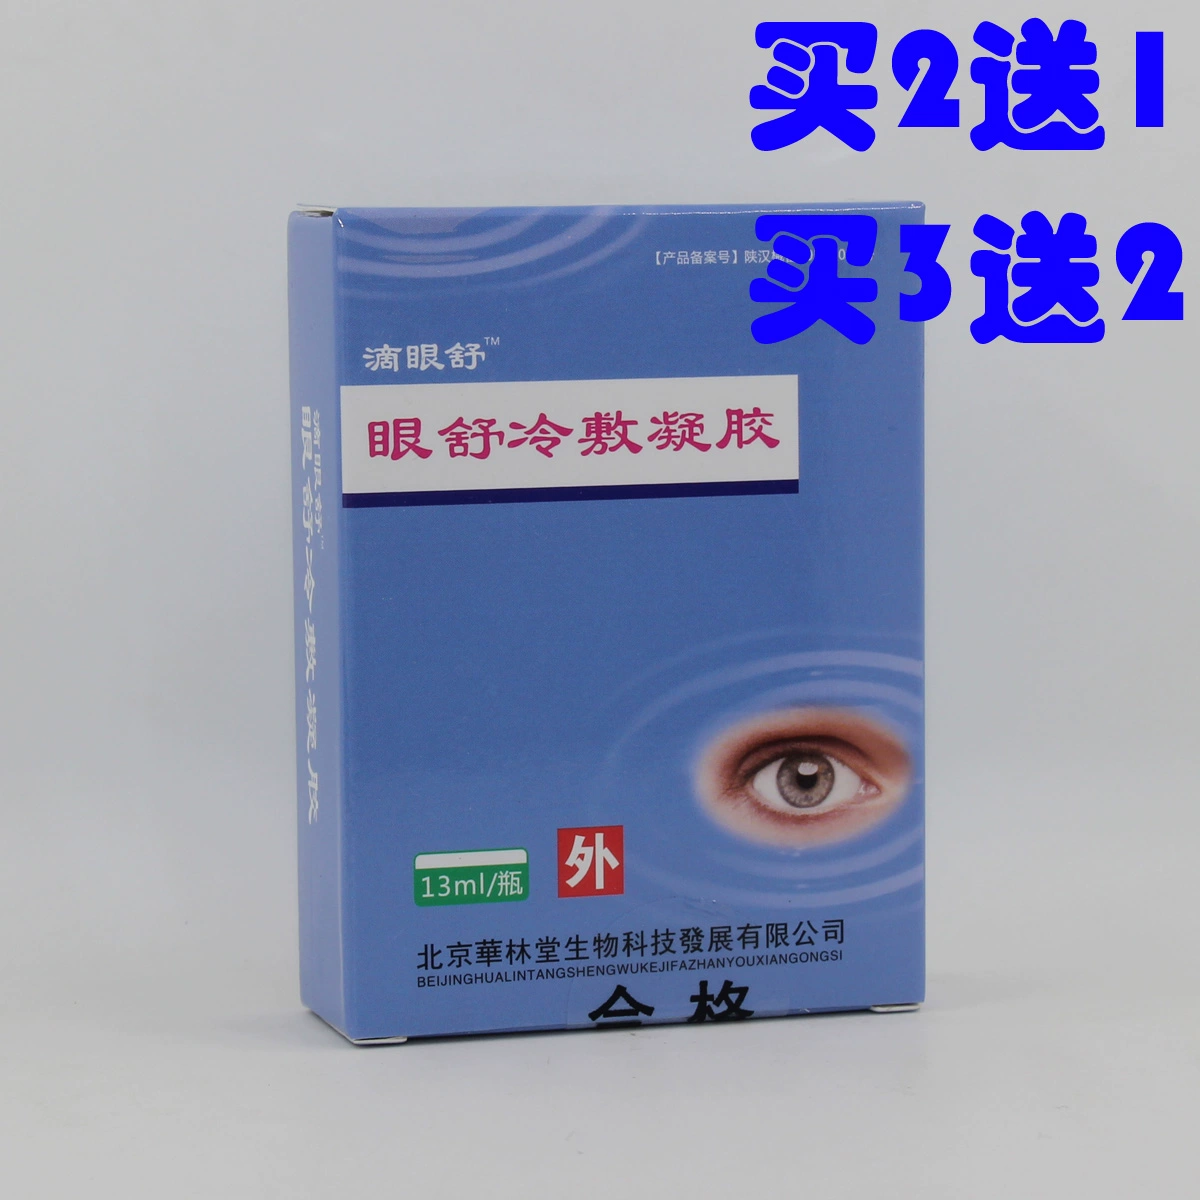 Chính hãng Hualintang Drops Eye Drops Eye Drops Liquid Liquid Bai Yi Xiao Bai Bai Qing Presbyopia Mờ khô - Thuốc nhỏ mắt